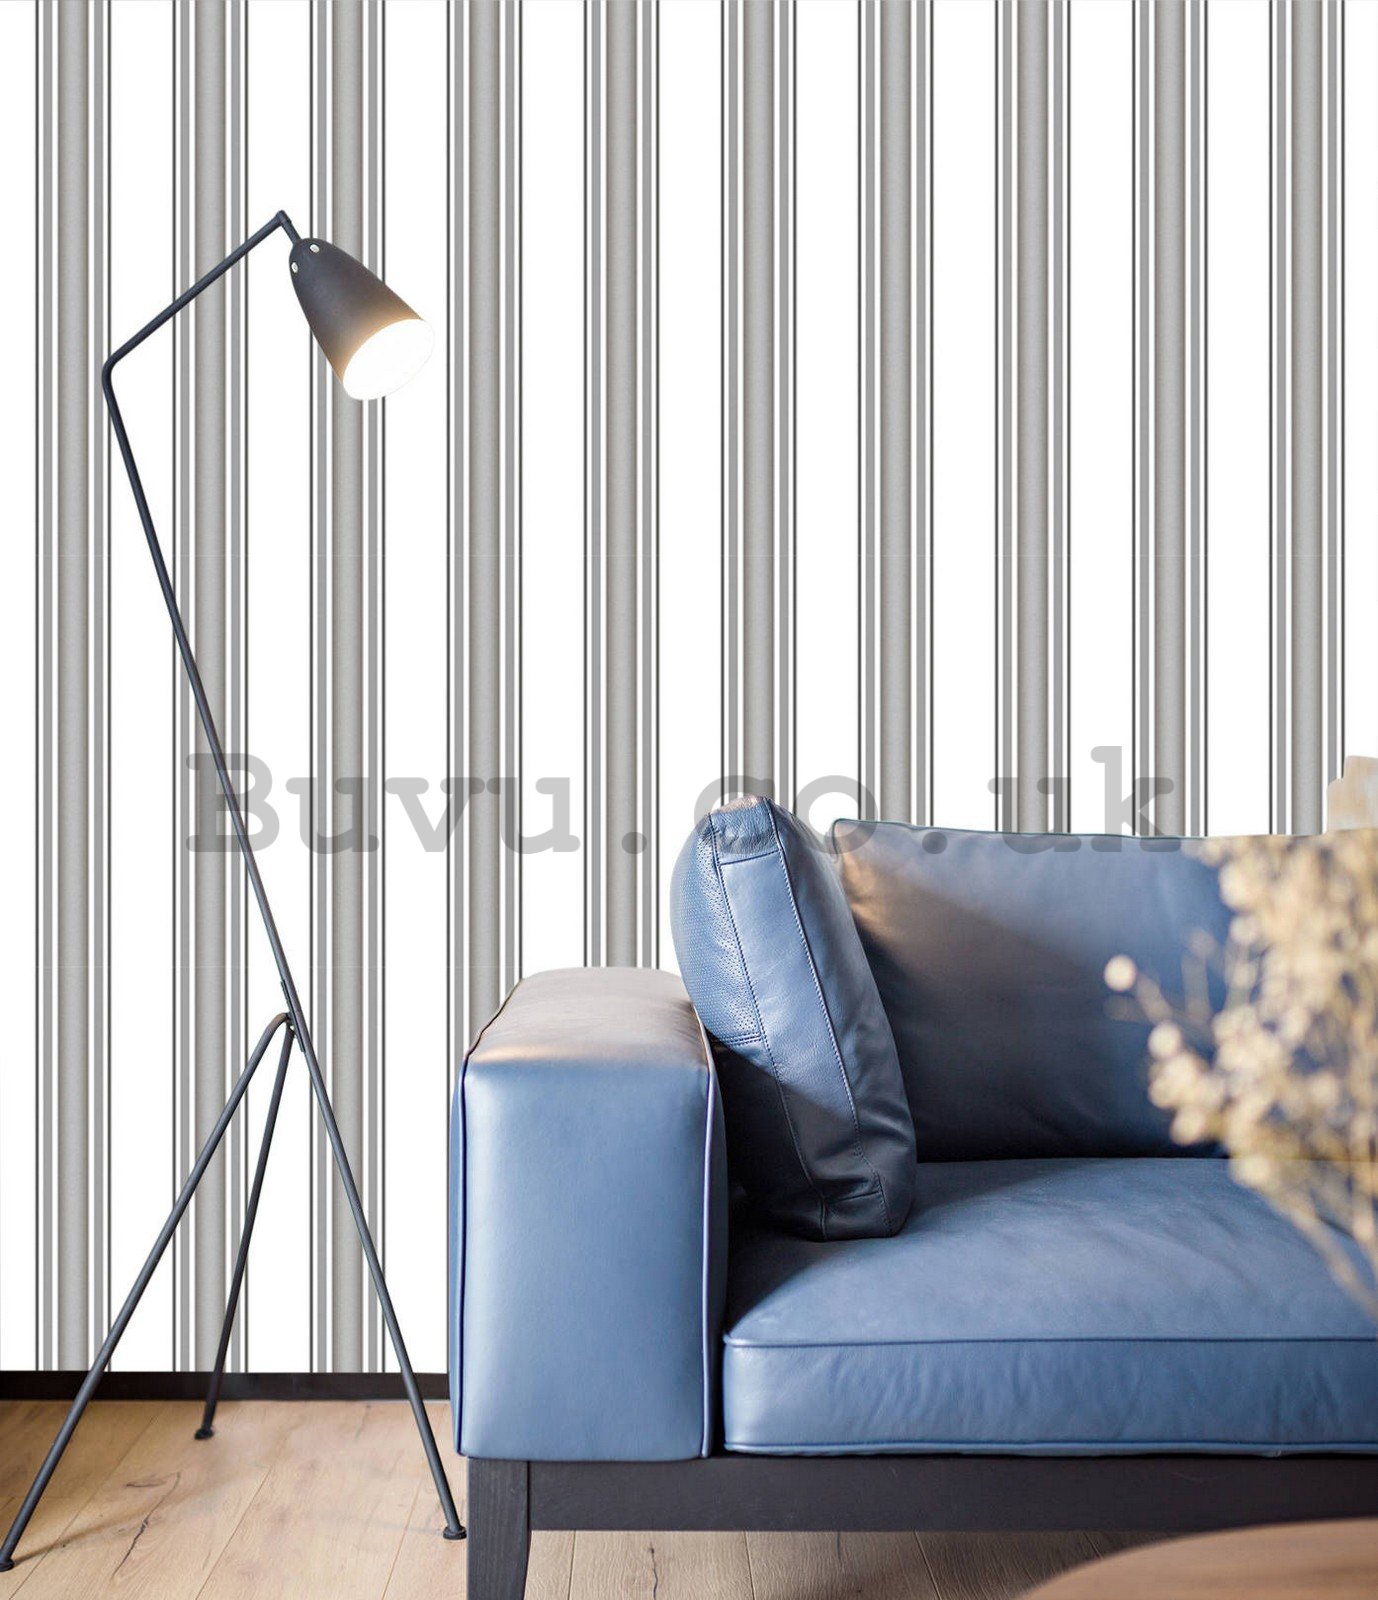 Vinyl wallpaper vertical stripes shades of dark gray on a white background